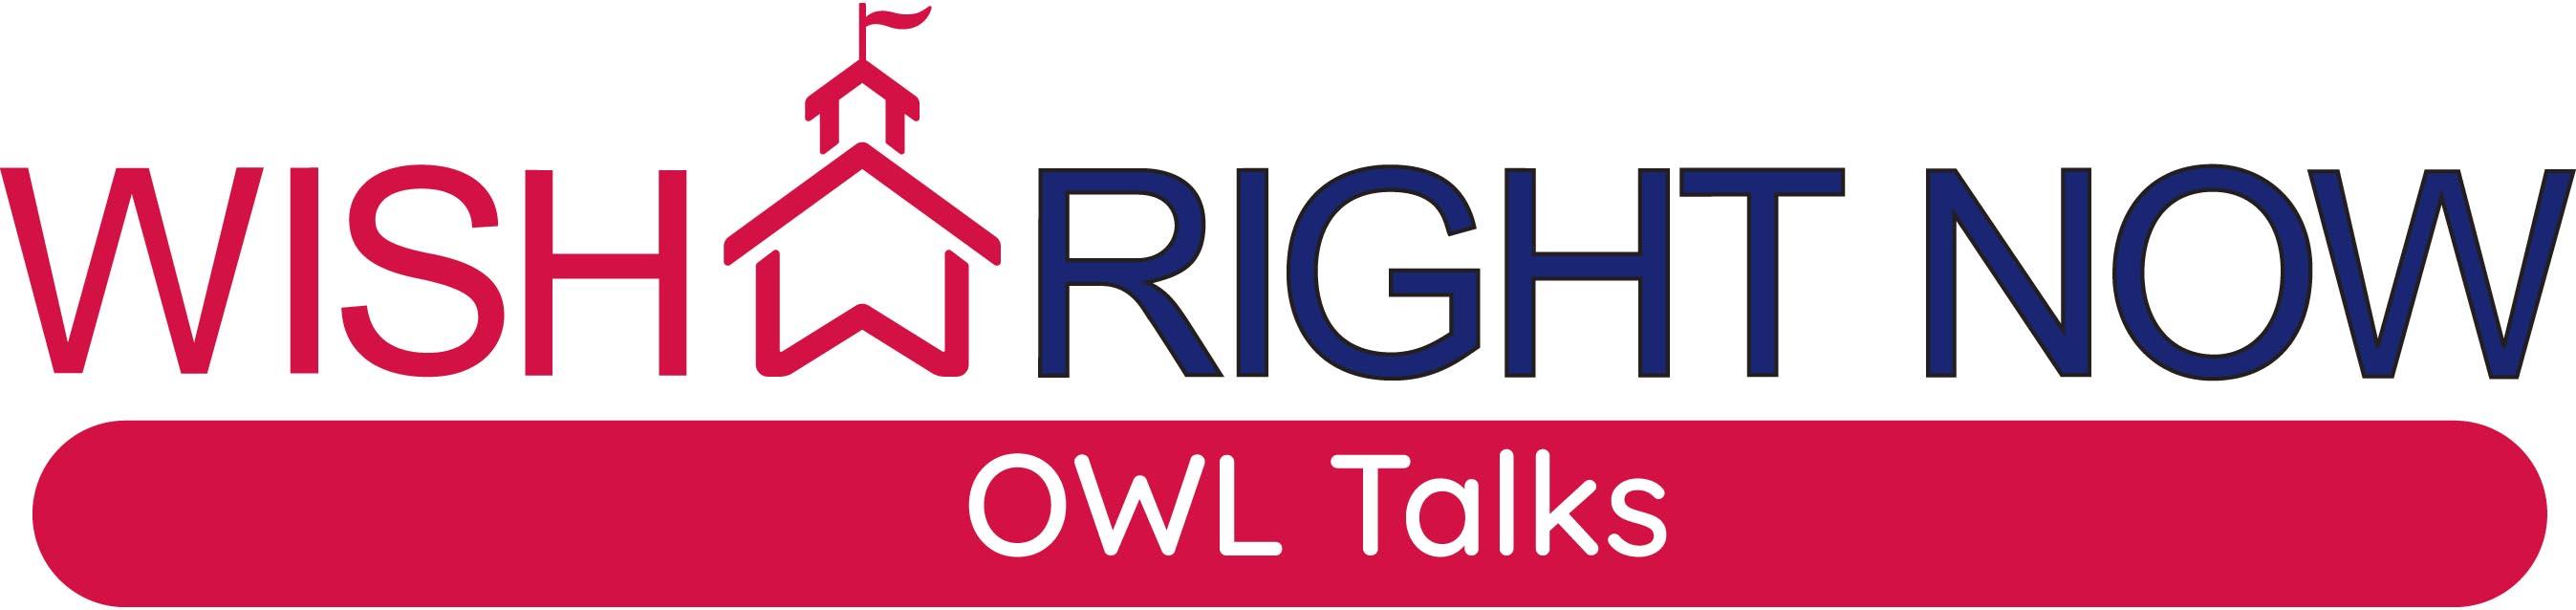 Owl talks logo